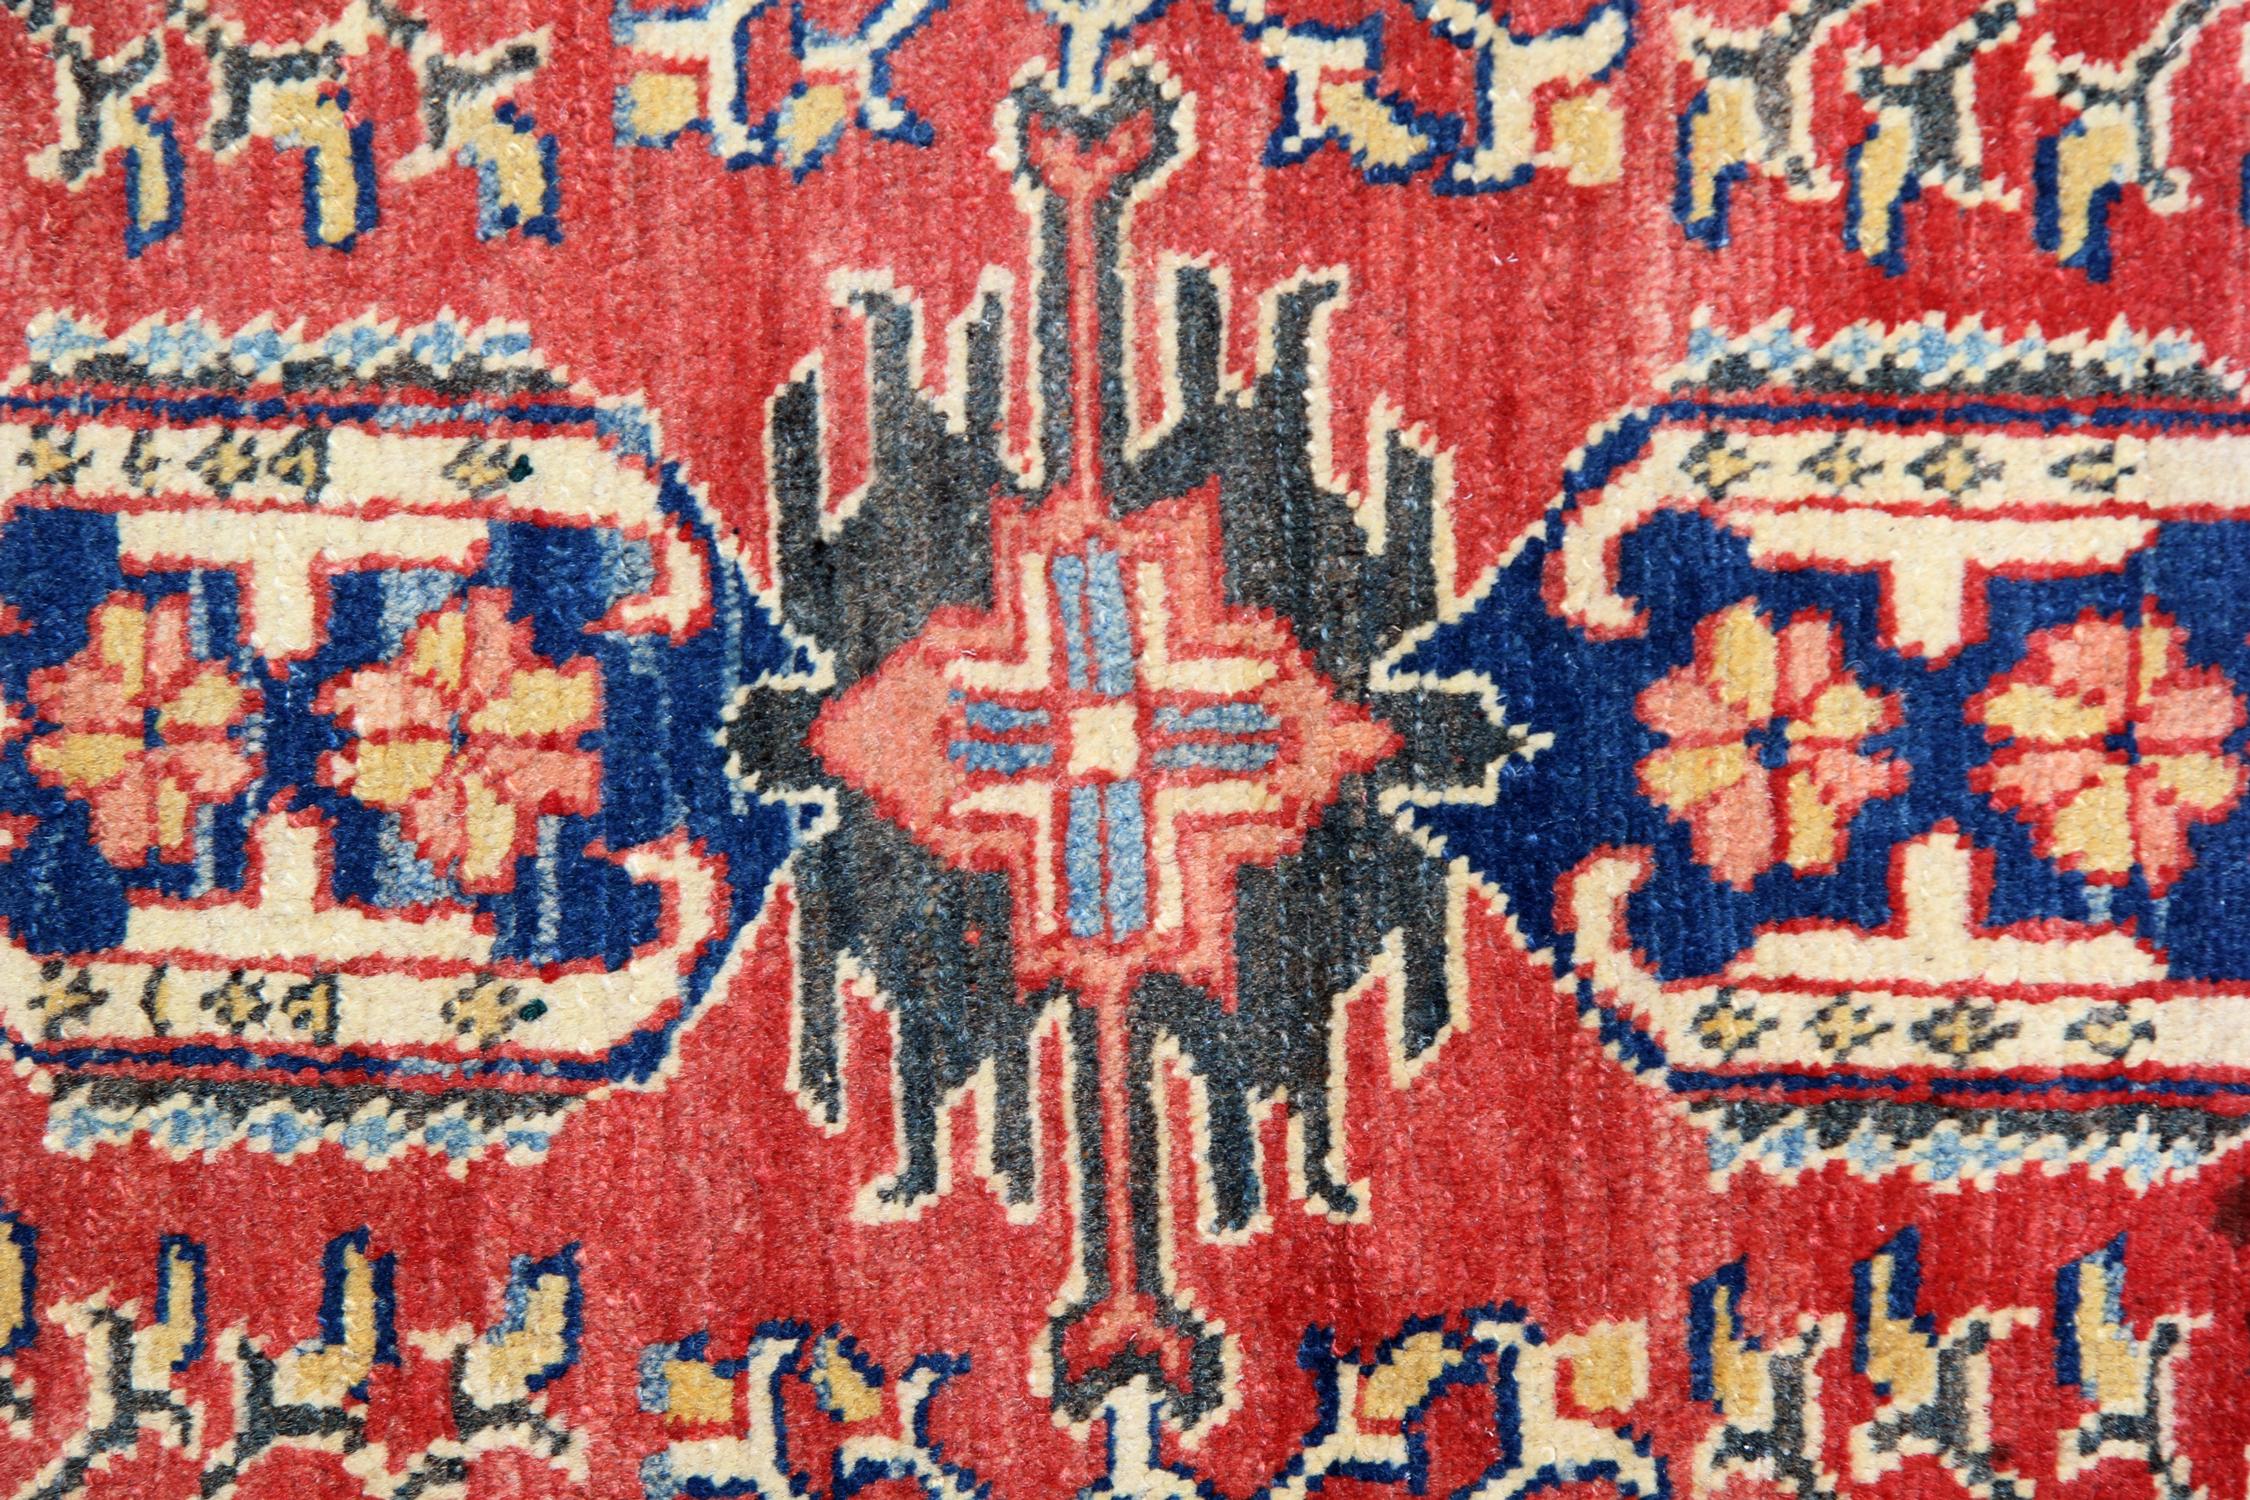 Hand-Crafted Vintage Afghan Rug, Red Handwoven Red Wool Carpet